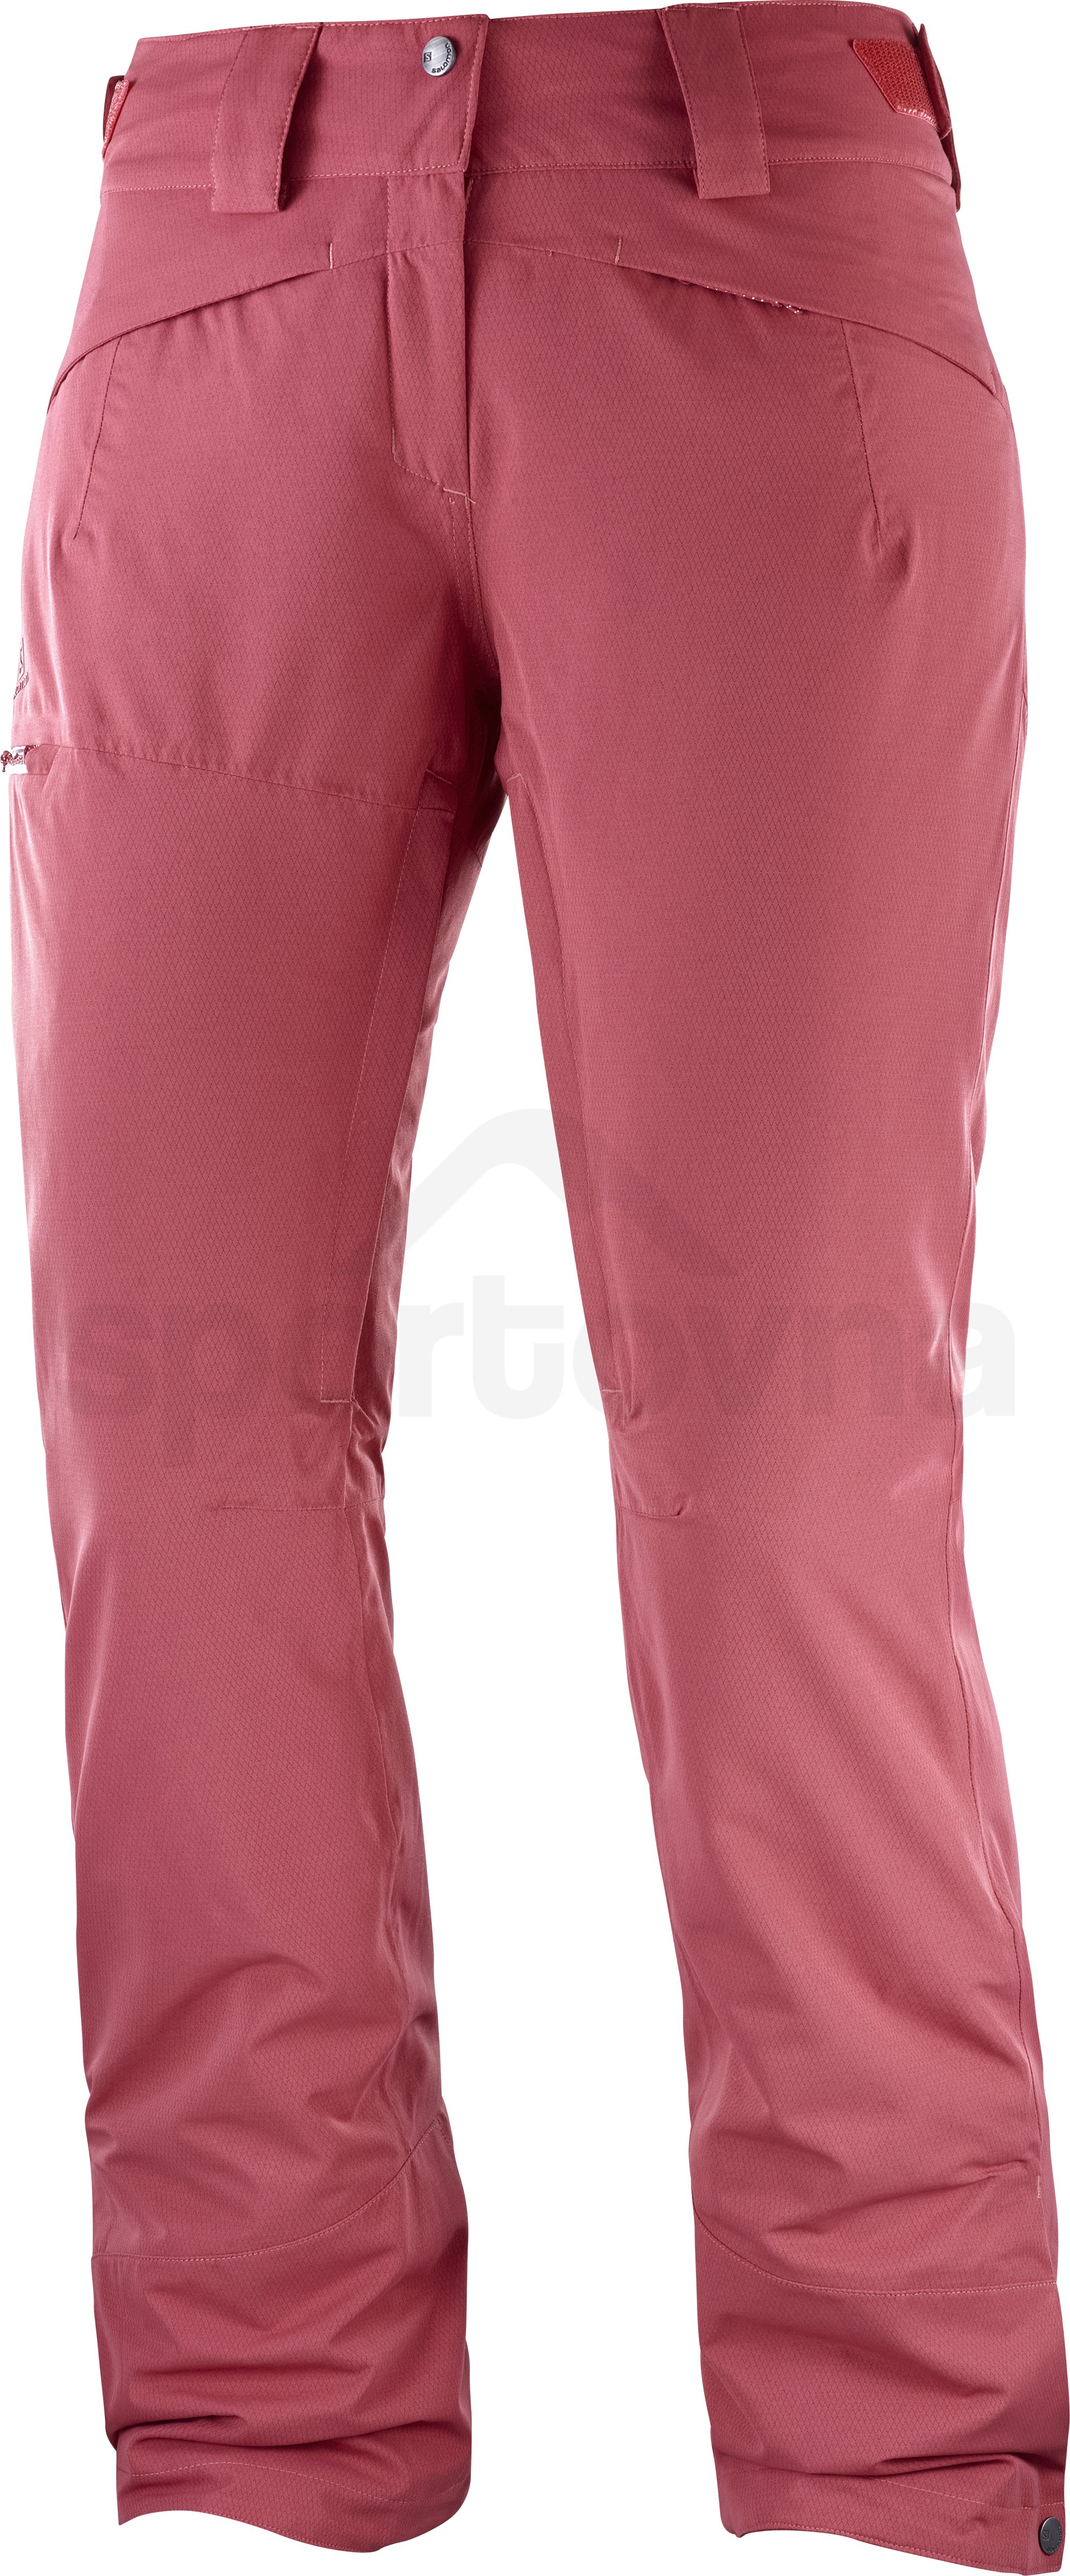 Lyžařské kalhoty Salomon QST Snow Pant W - růžová